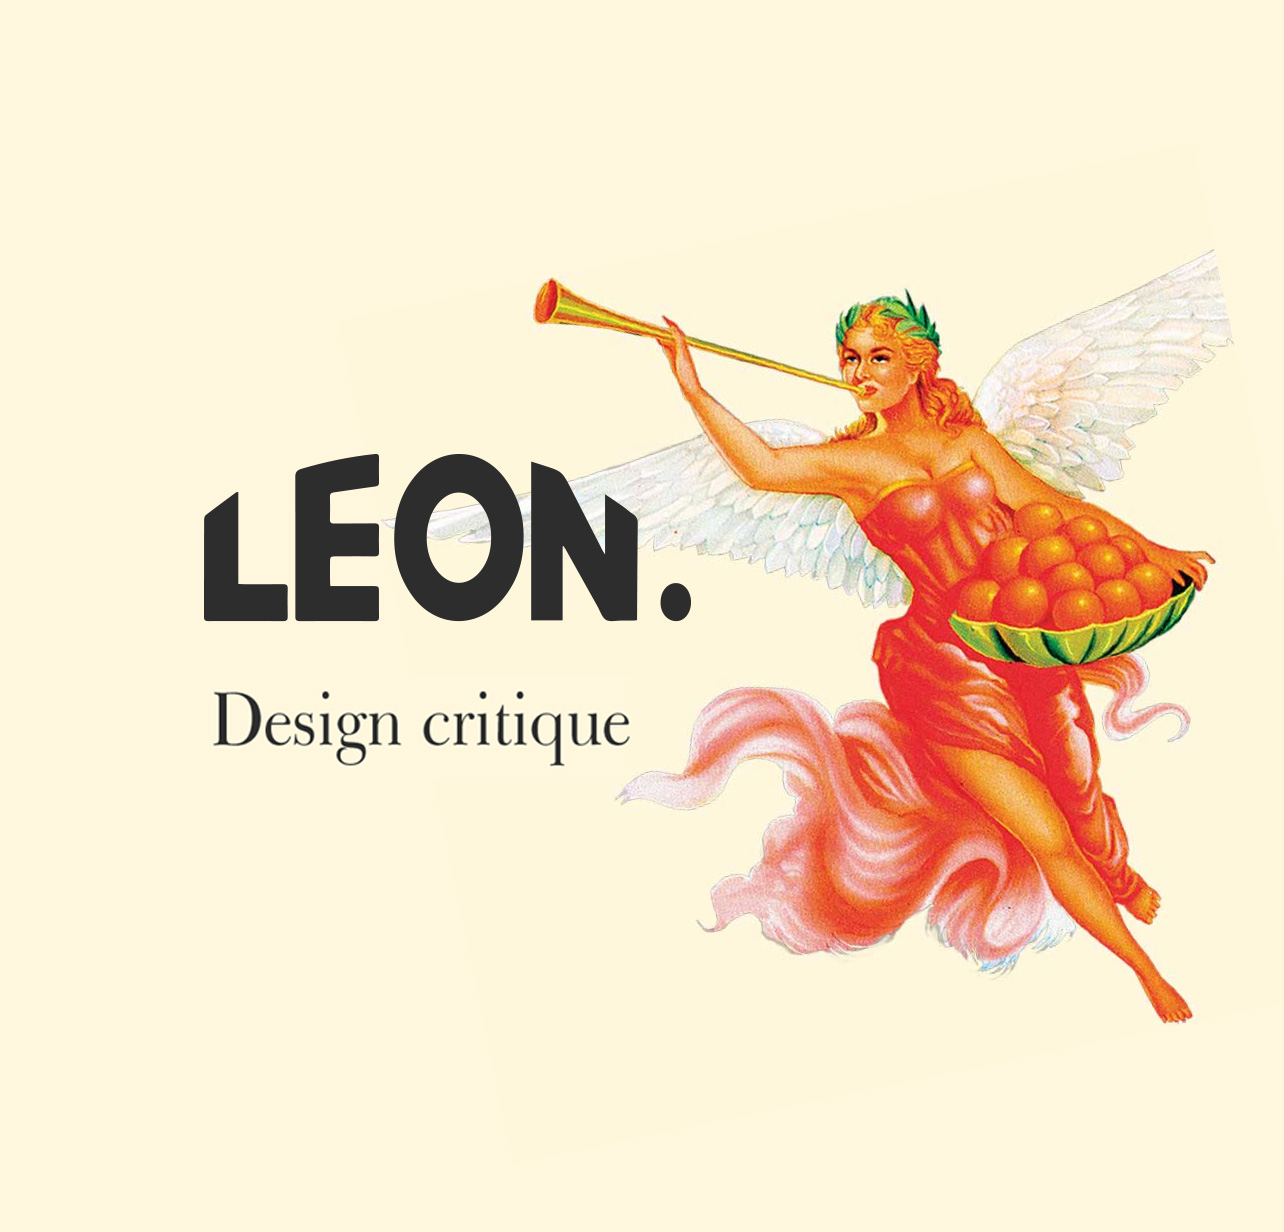 Leon restaurants design critique